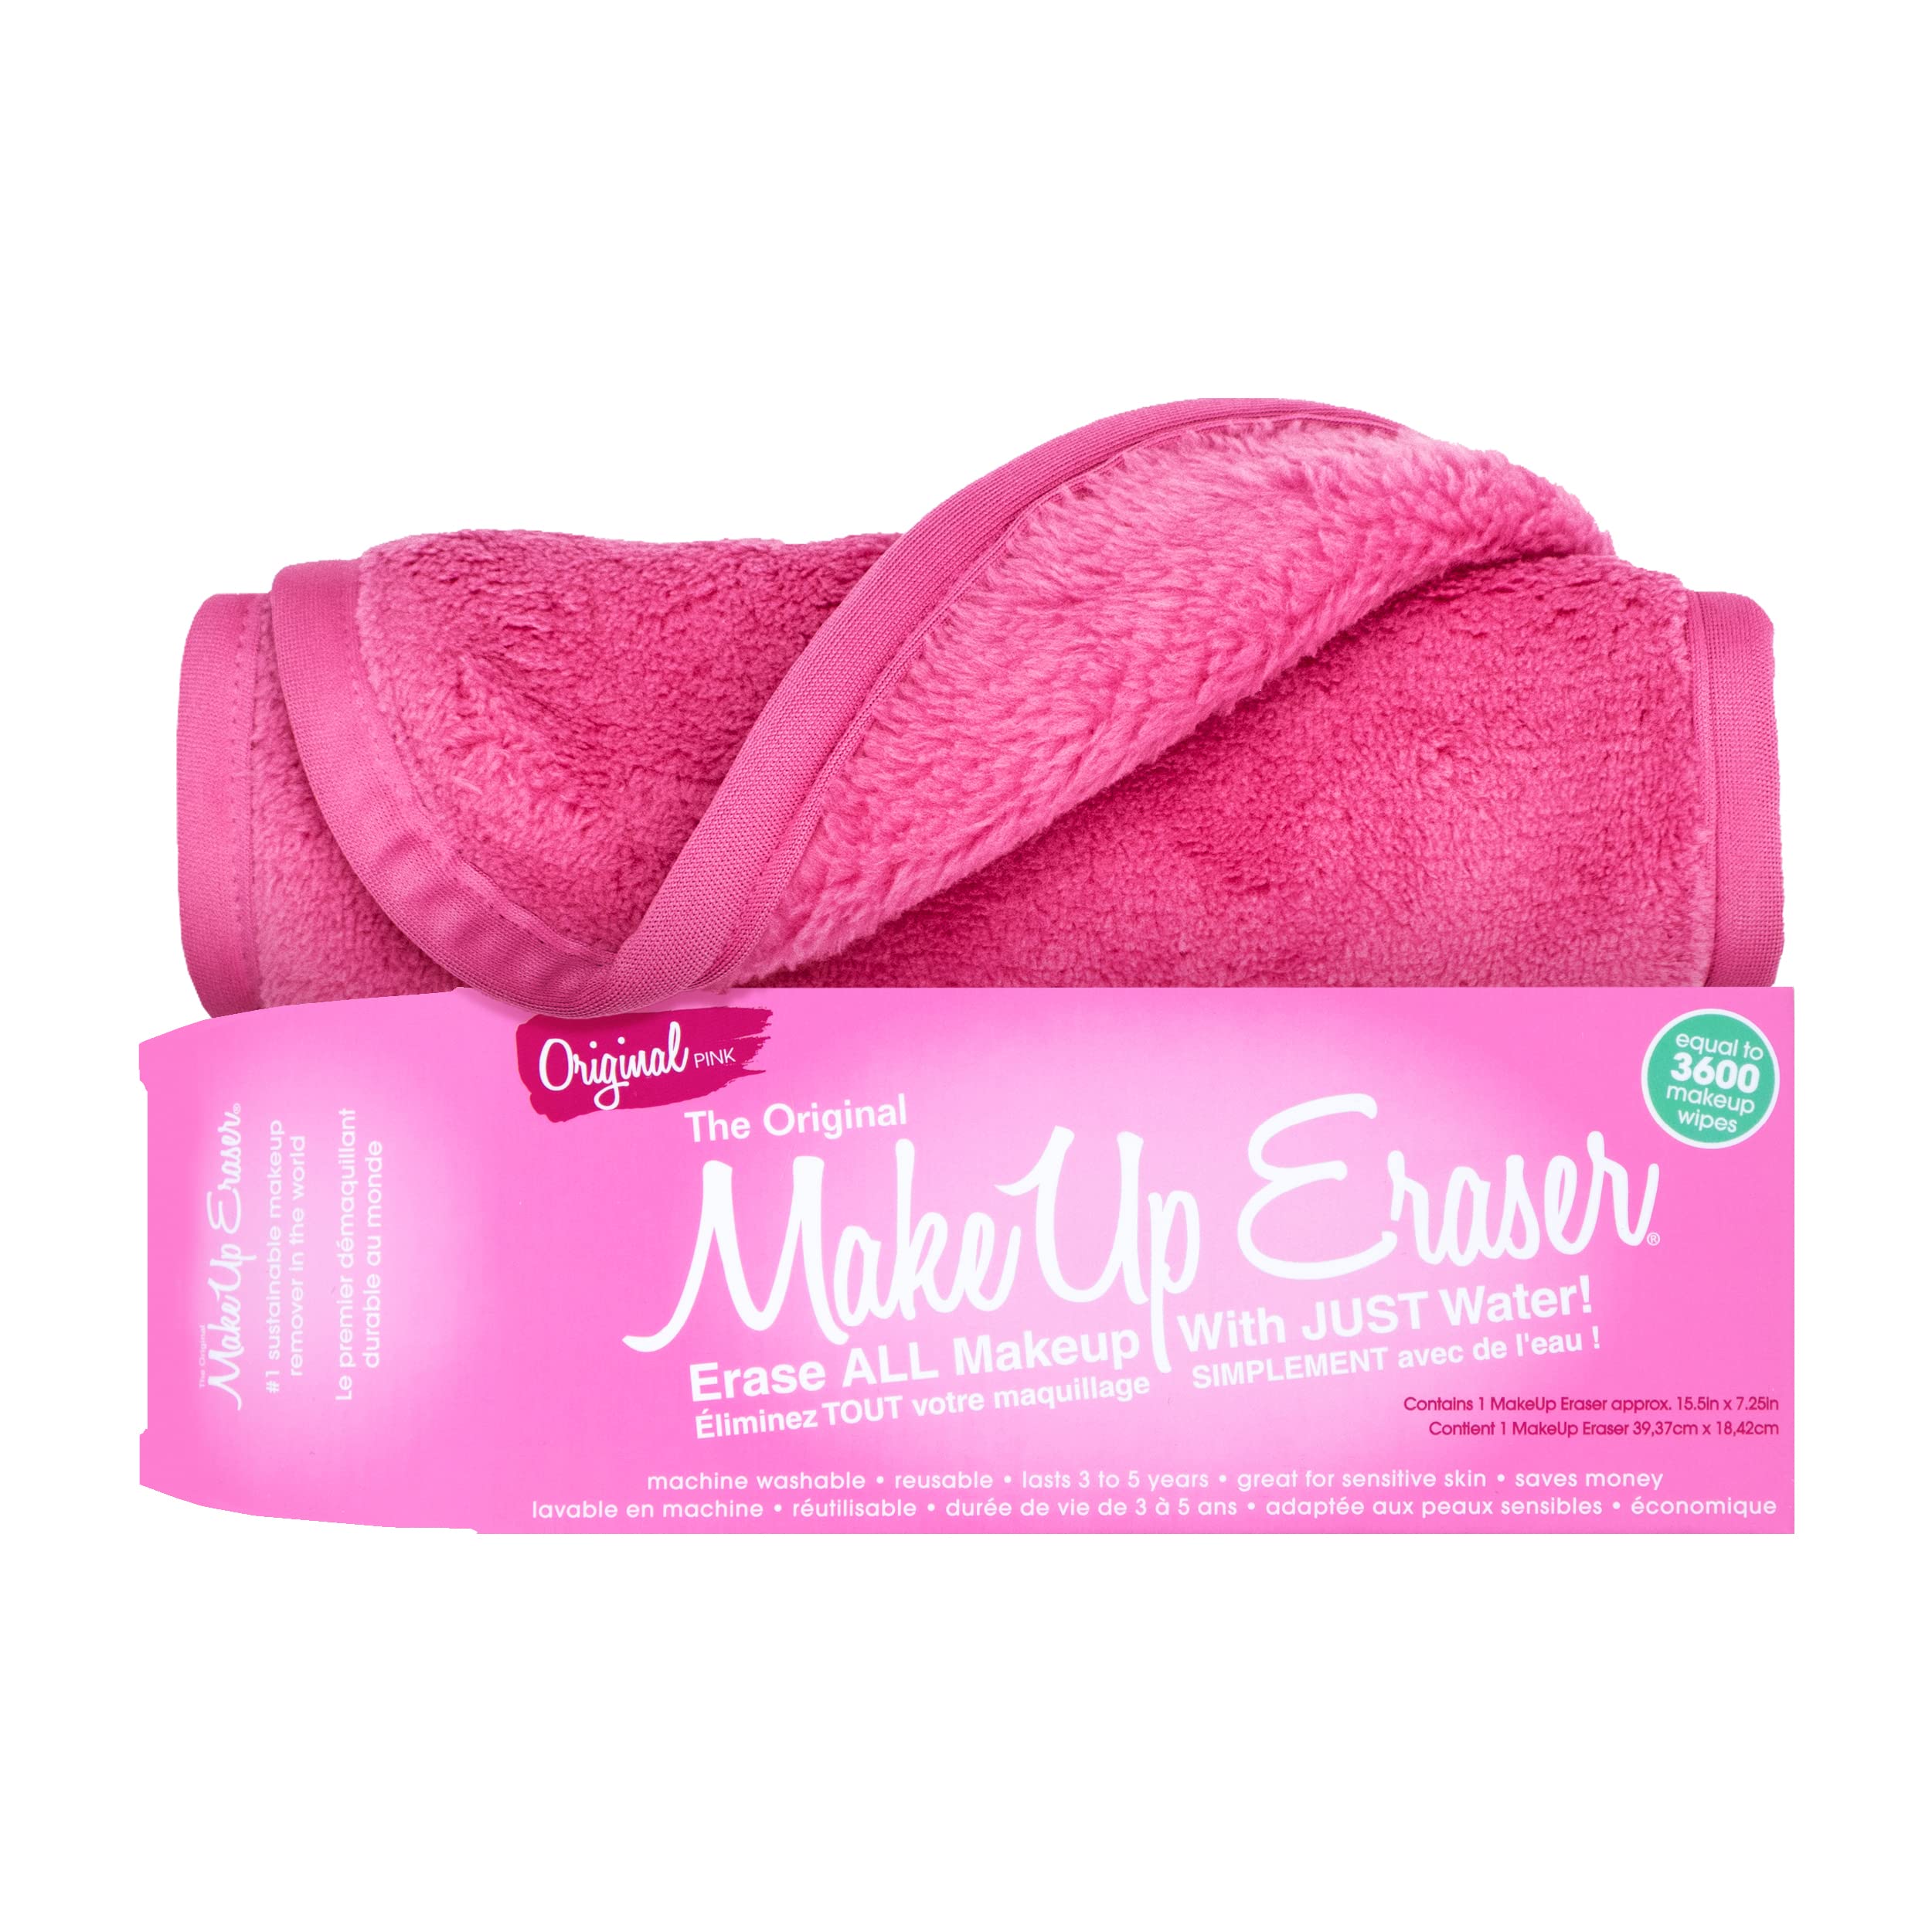 The Original Makeup Eraser (Original Pink) $7.75 + Free Shipping w/ Prime or on $35+